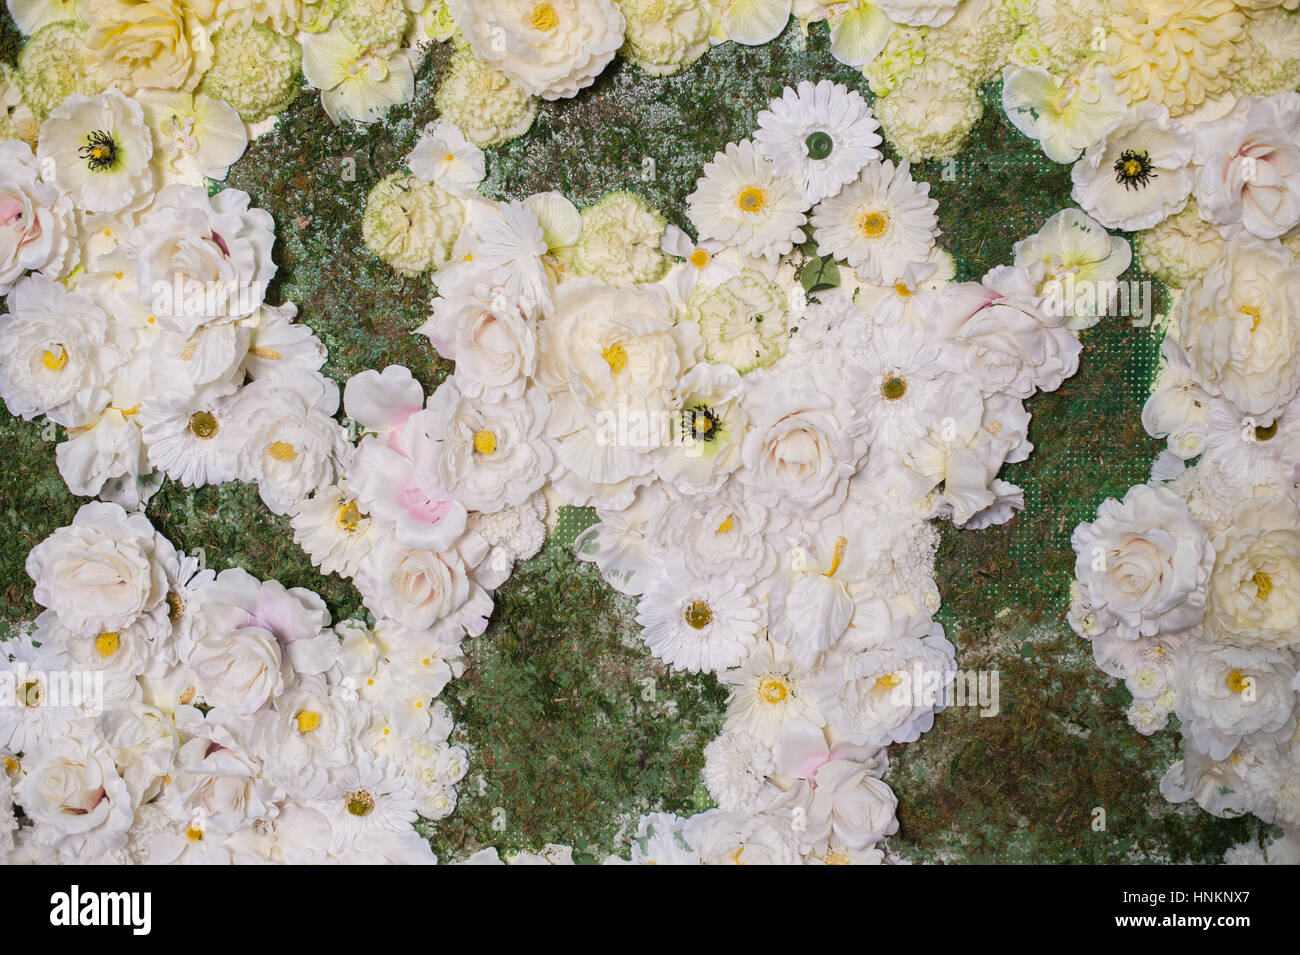 decor of white flowers for wedding ceremony Stock Photo